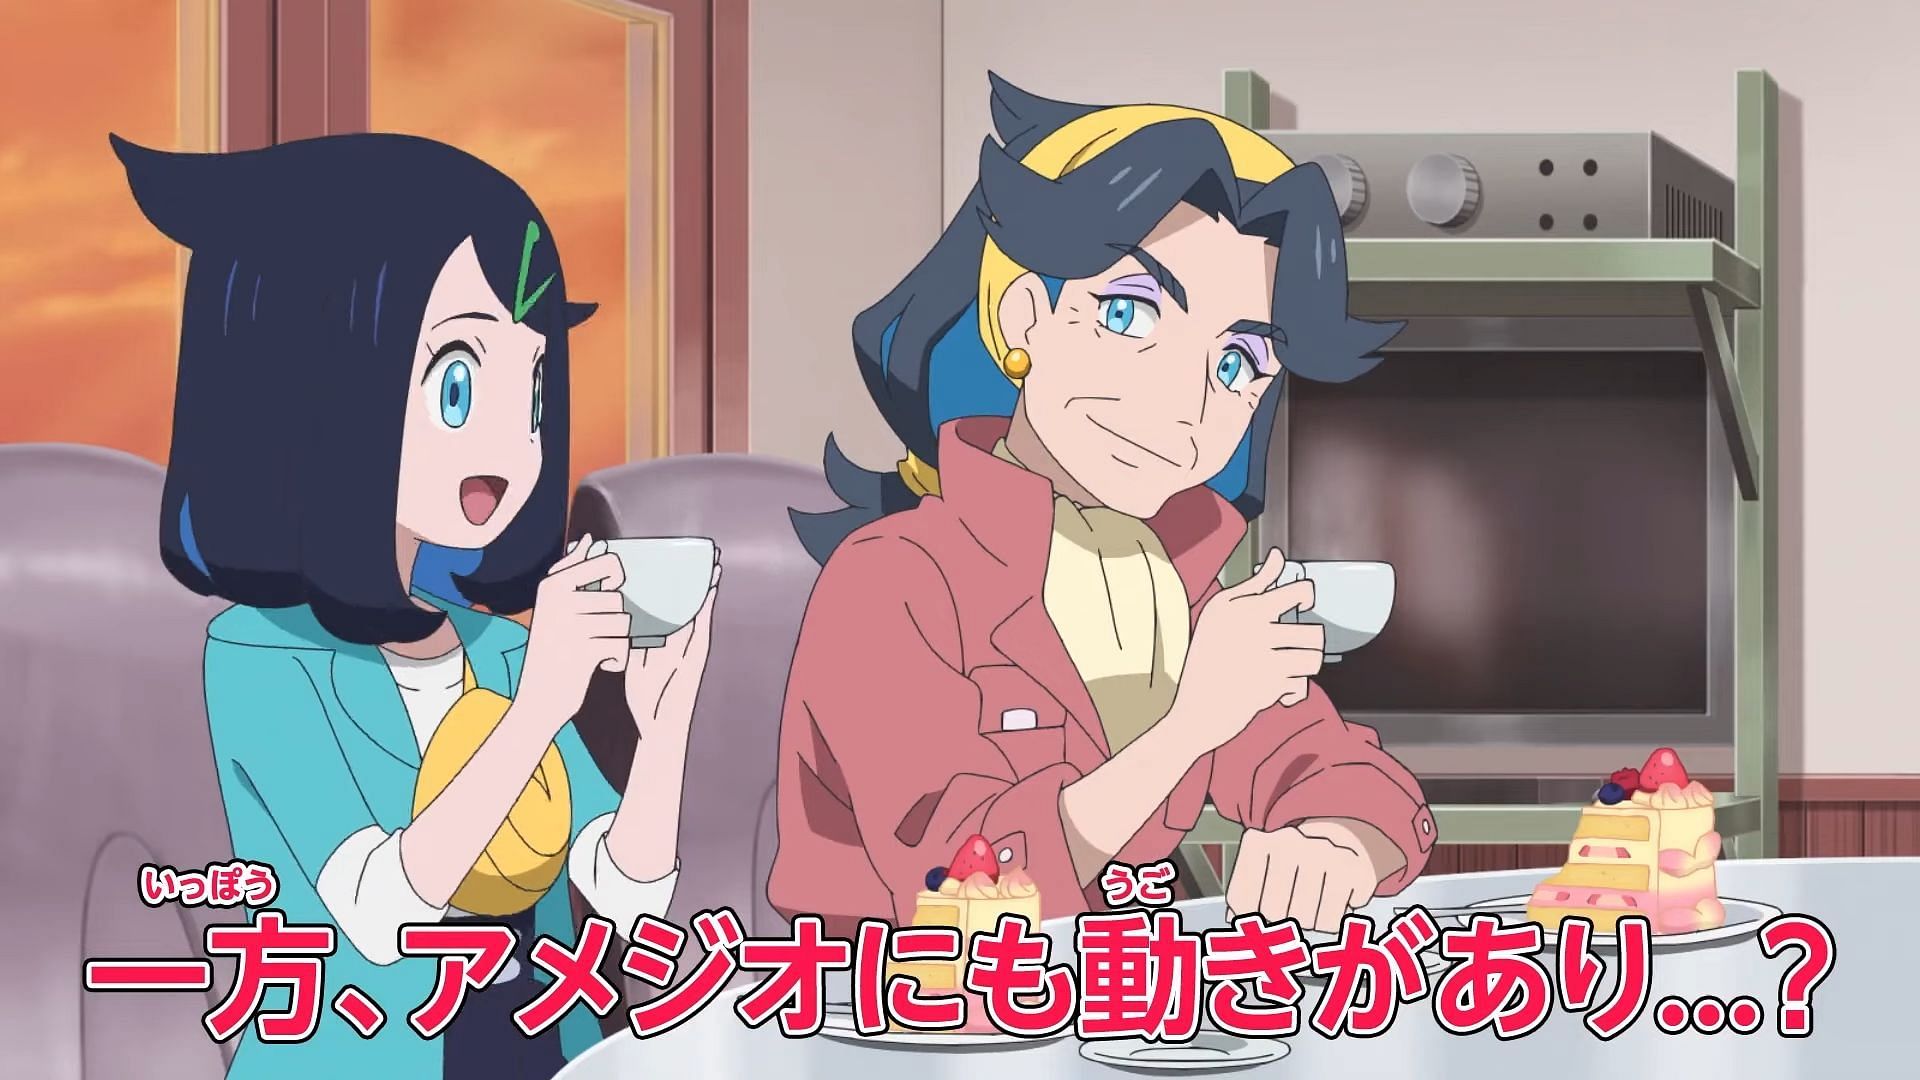 Diana and Liko enjoy time together in Pokemon Horizons Episode 34. (Image via The Pokemon Company)